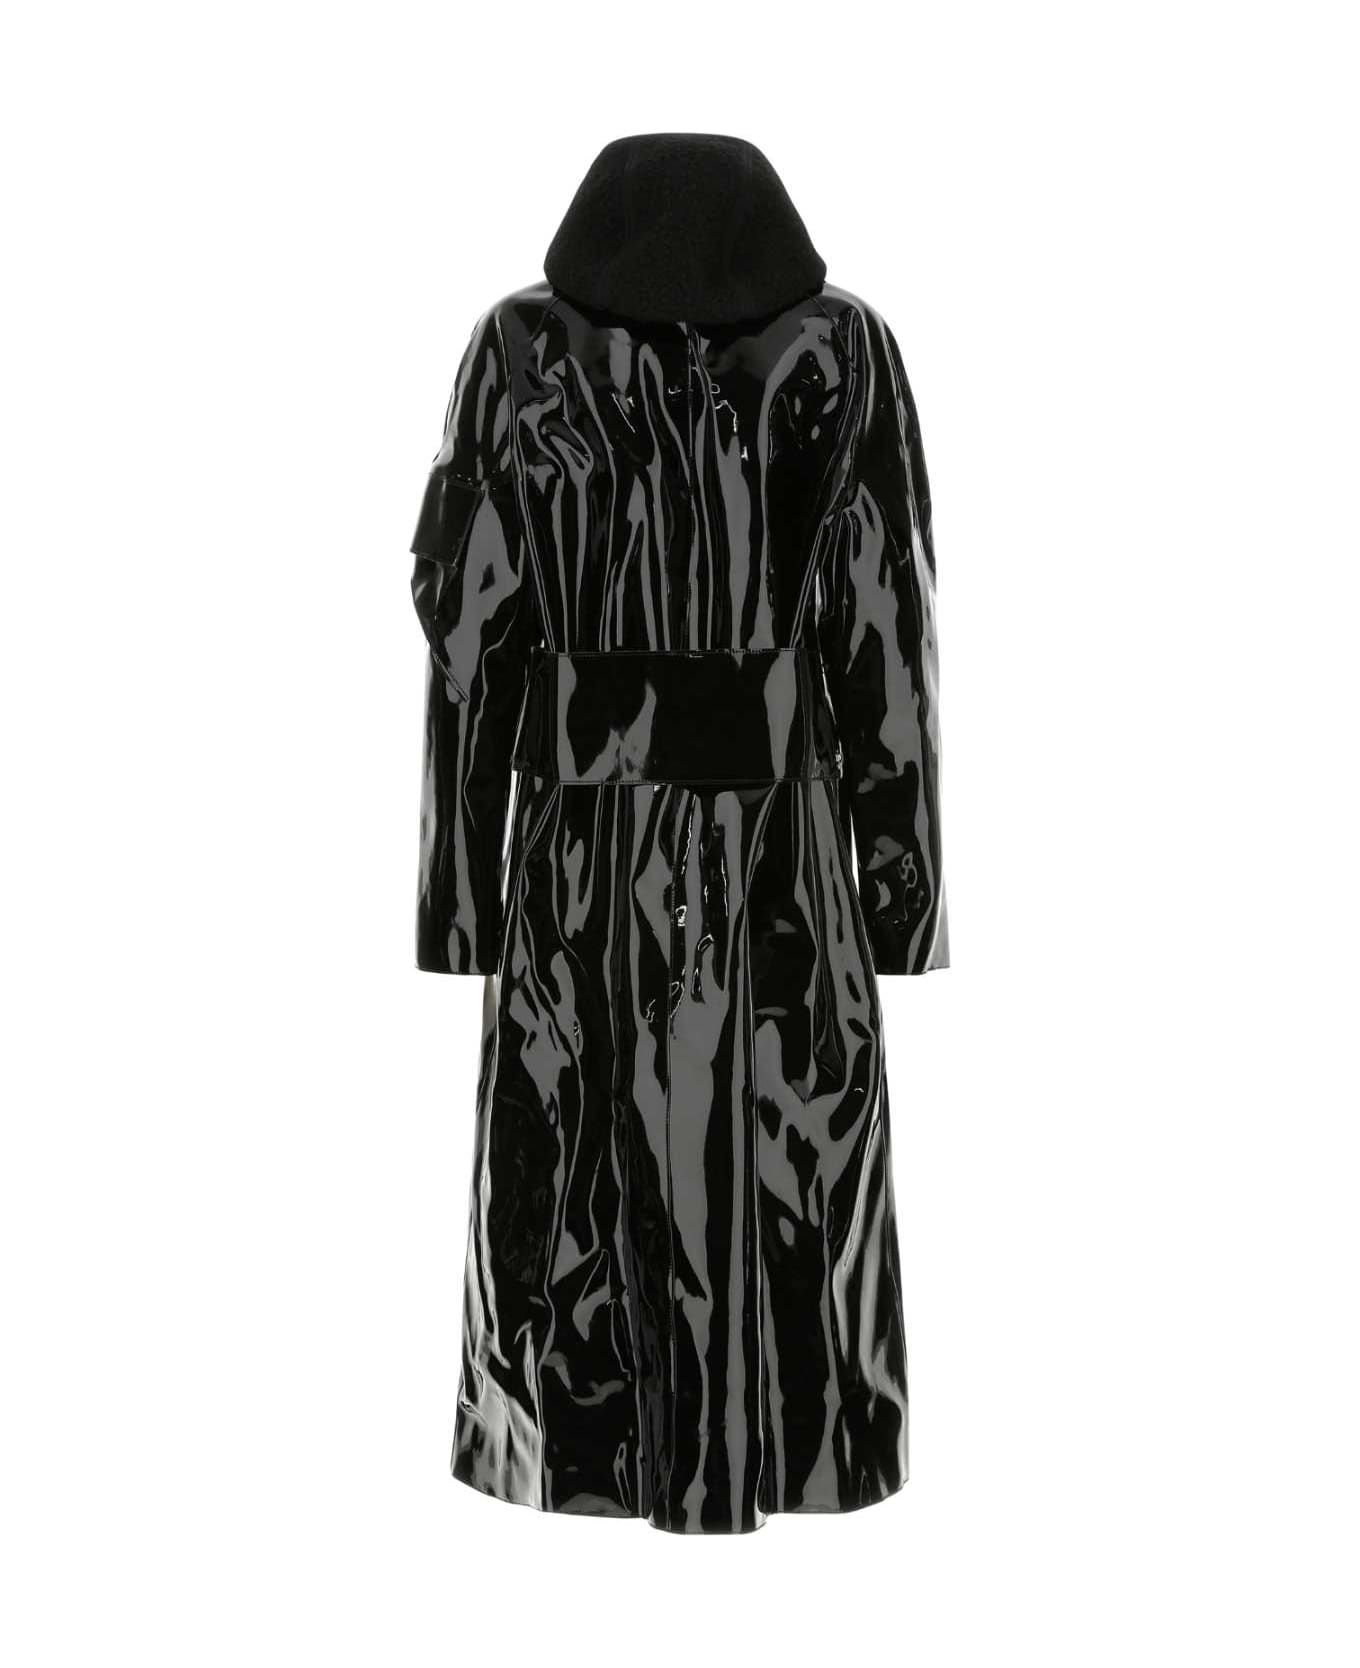 1017 ALYX 9SM Black Fabric Paint Rain Coat - BLK0001